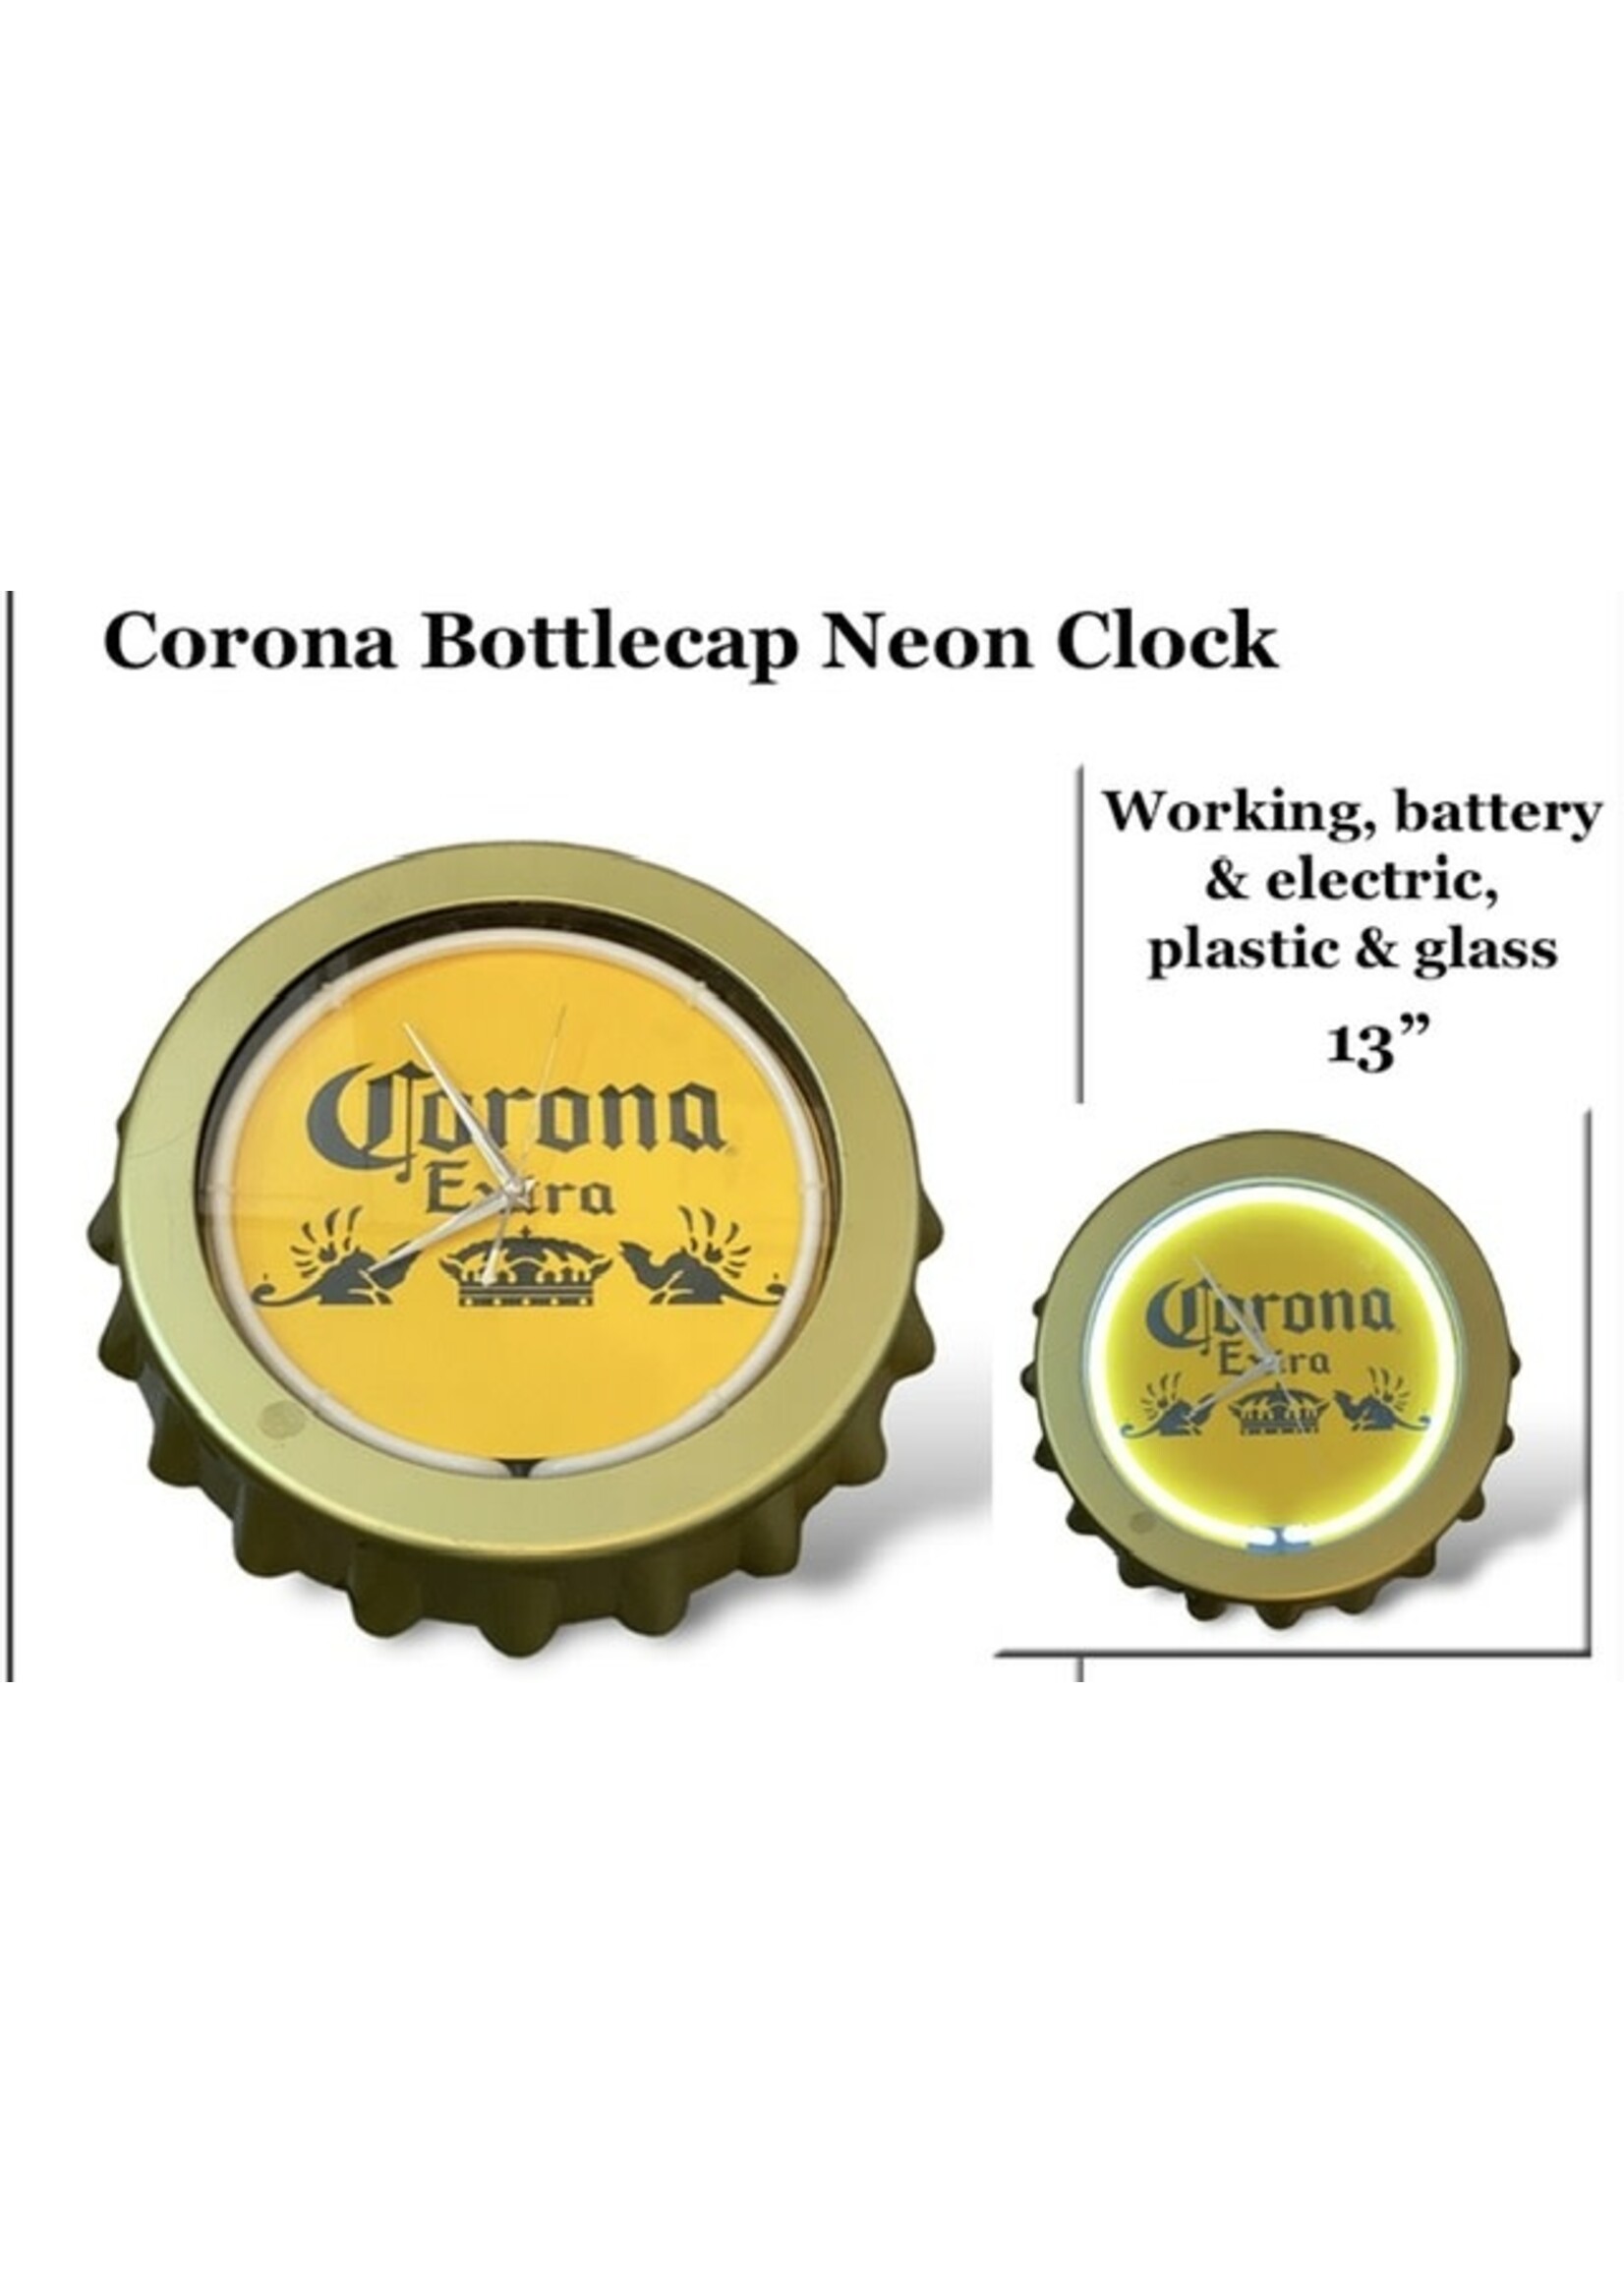 Vintage - Corona Neon Bottlecap Clock